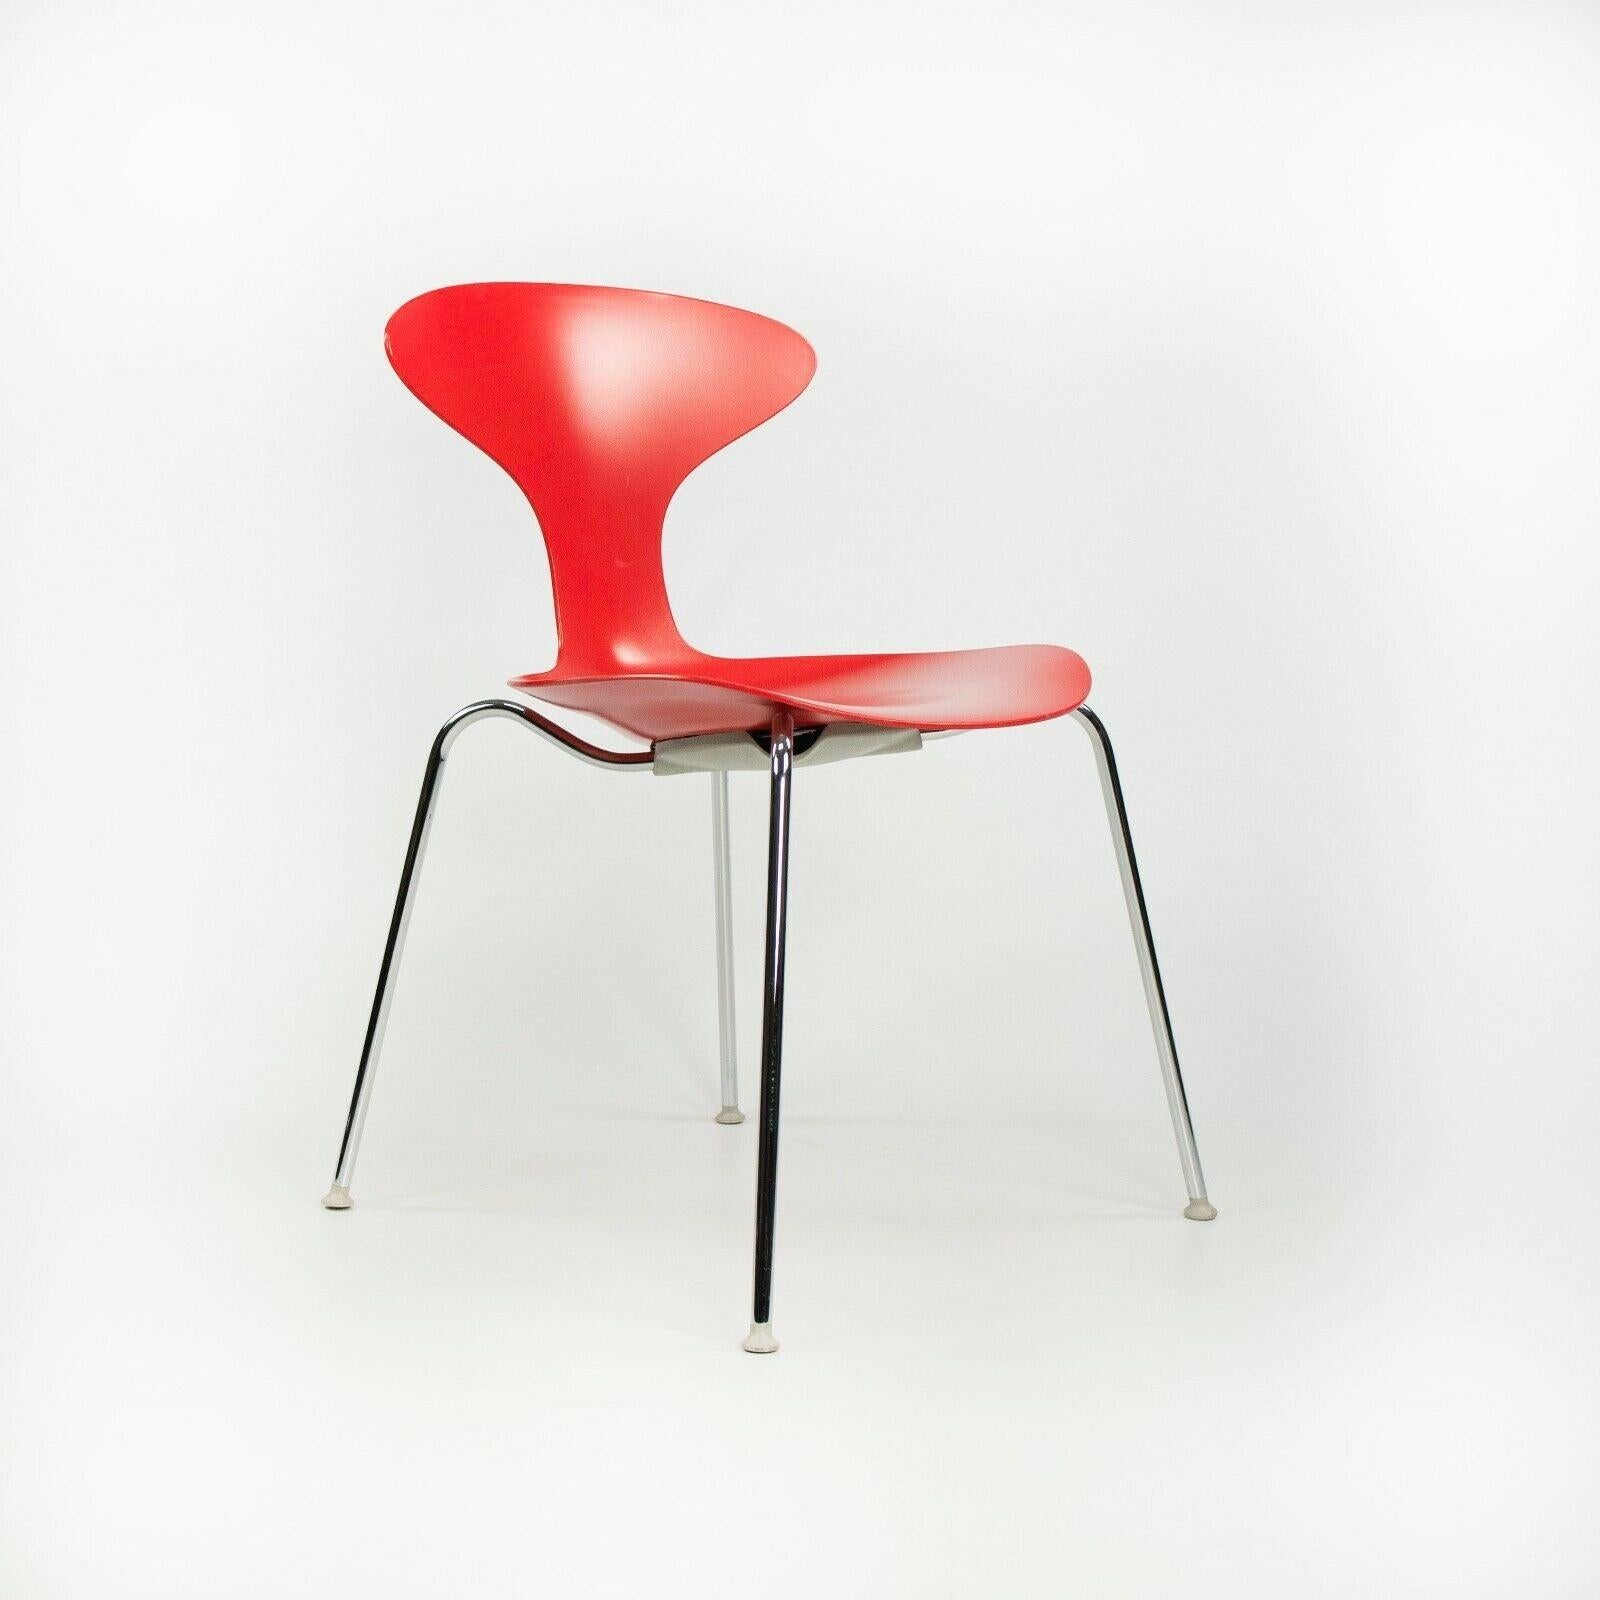 American 2010s Ross Lovegrove Orbit Chair by Bernhardt Design in Red Plastic Chrome Legs For Sale